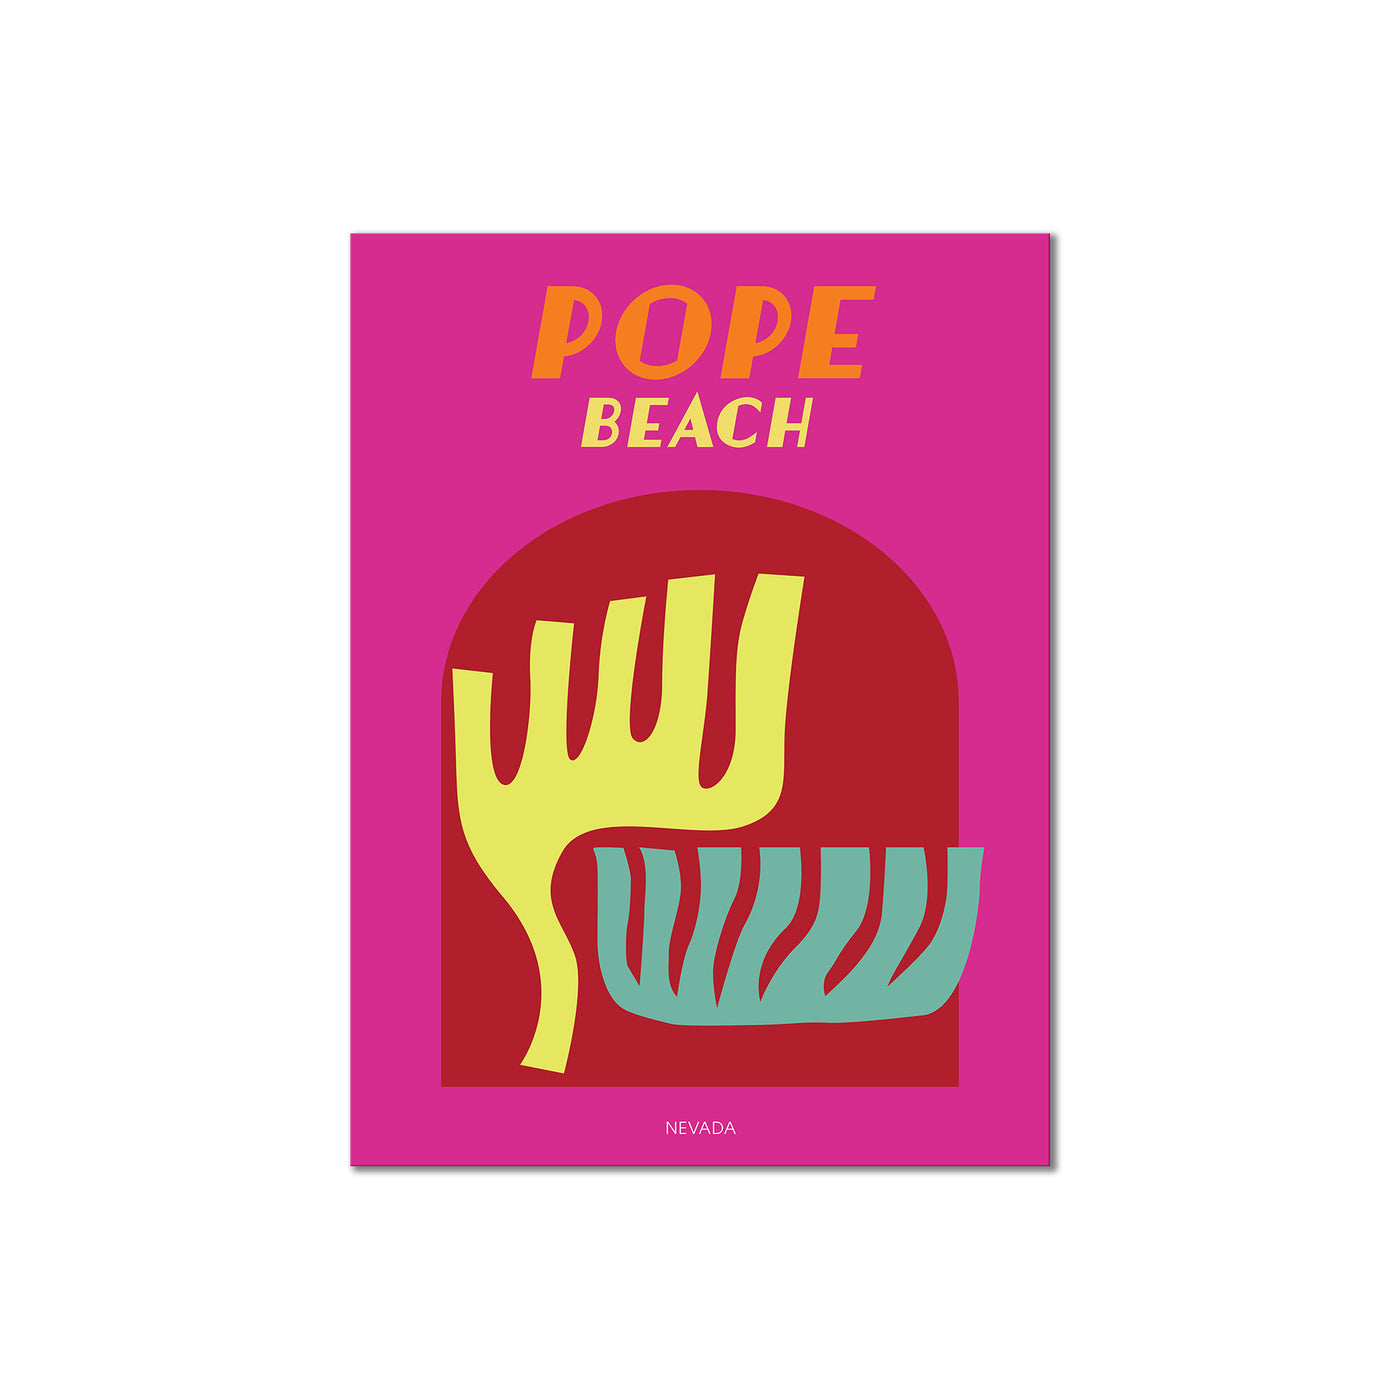 Pope Beach